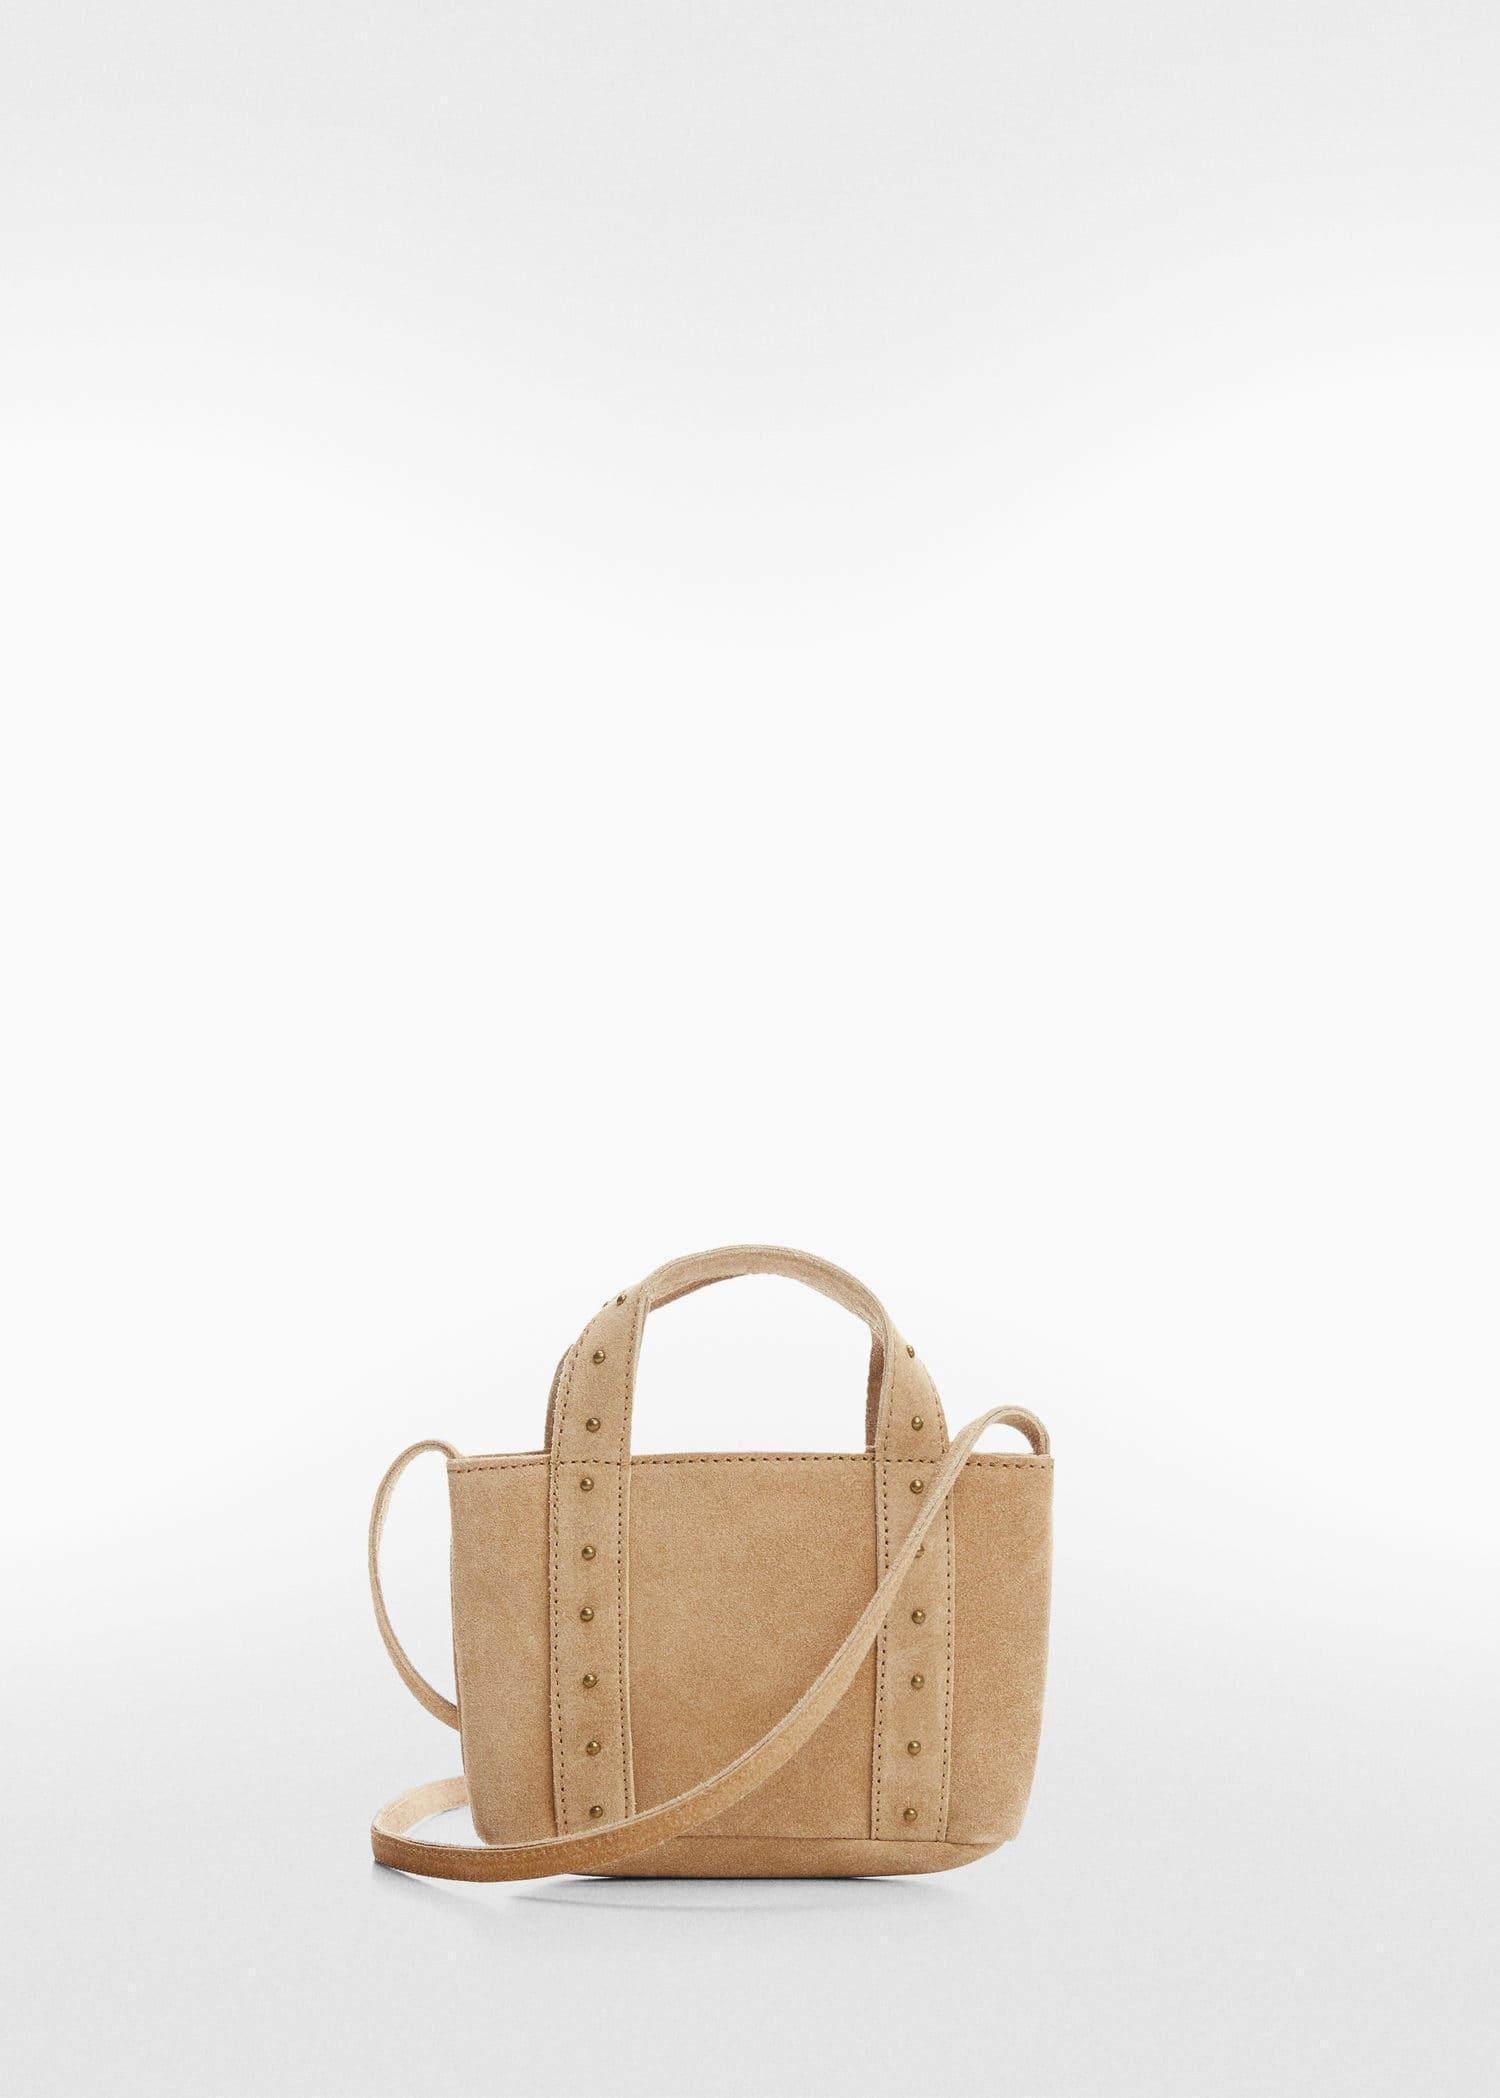 Mango - Brown Leather Mini Shopper Bag, Kids Girls